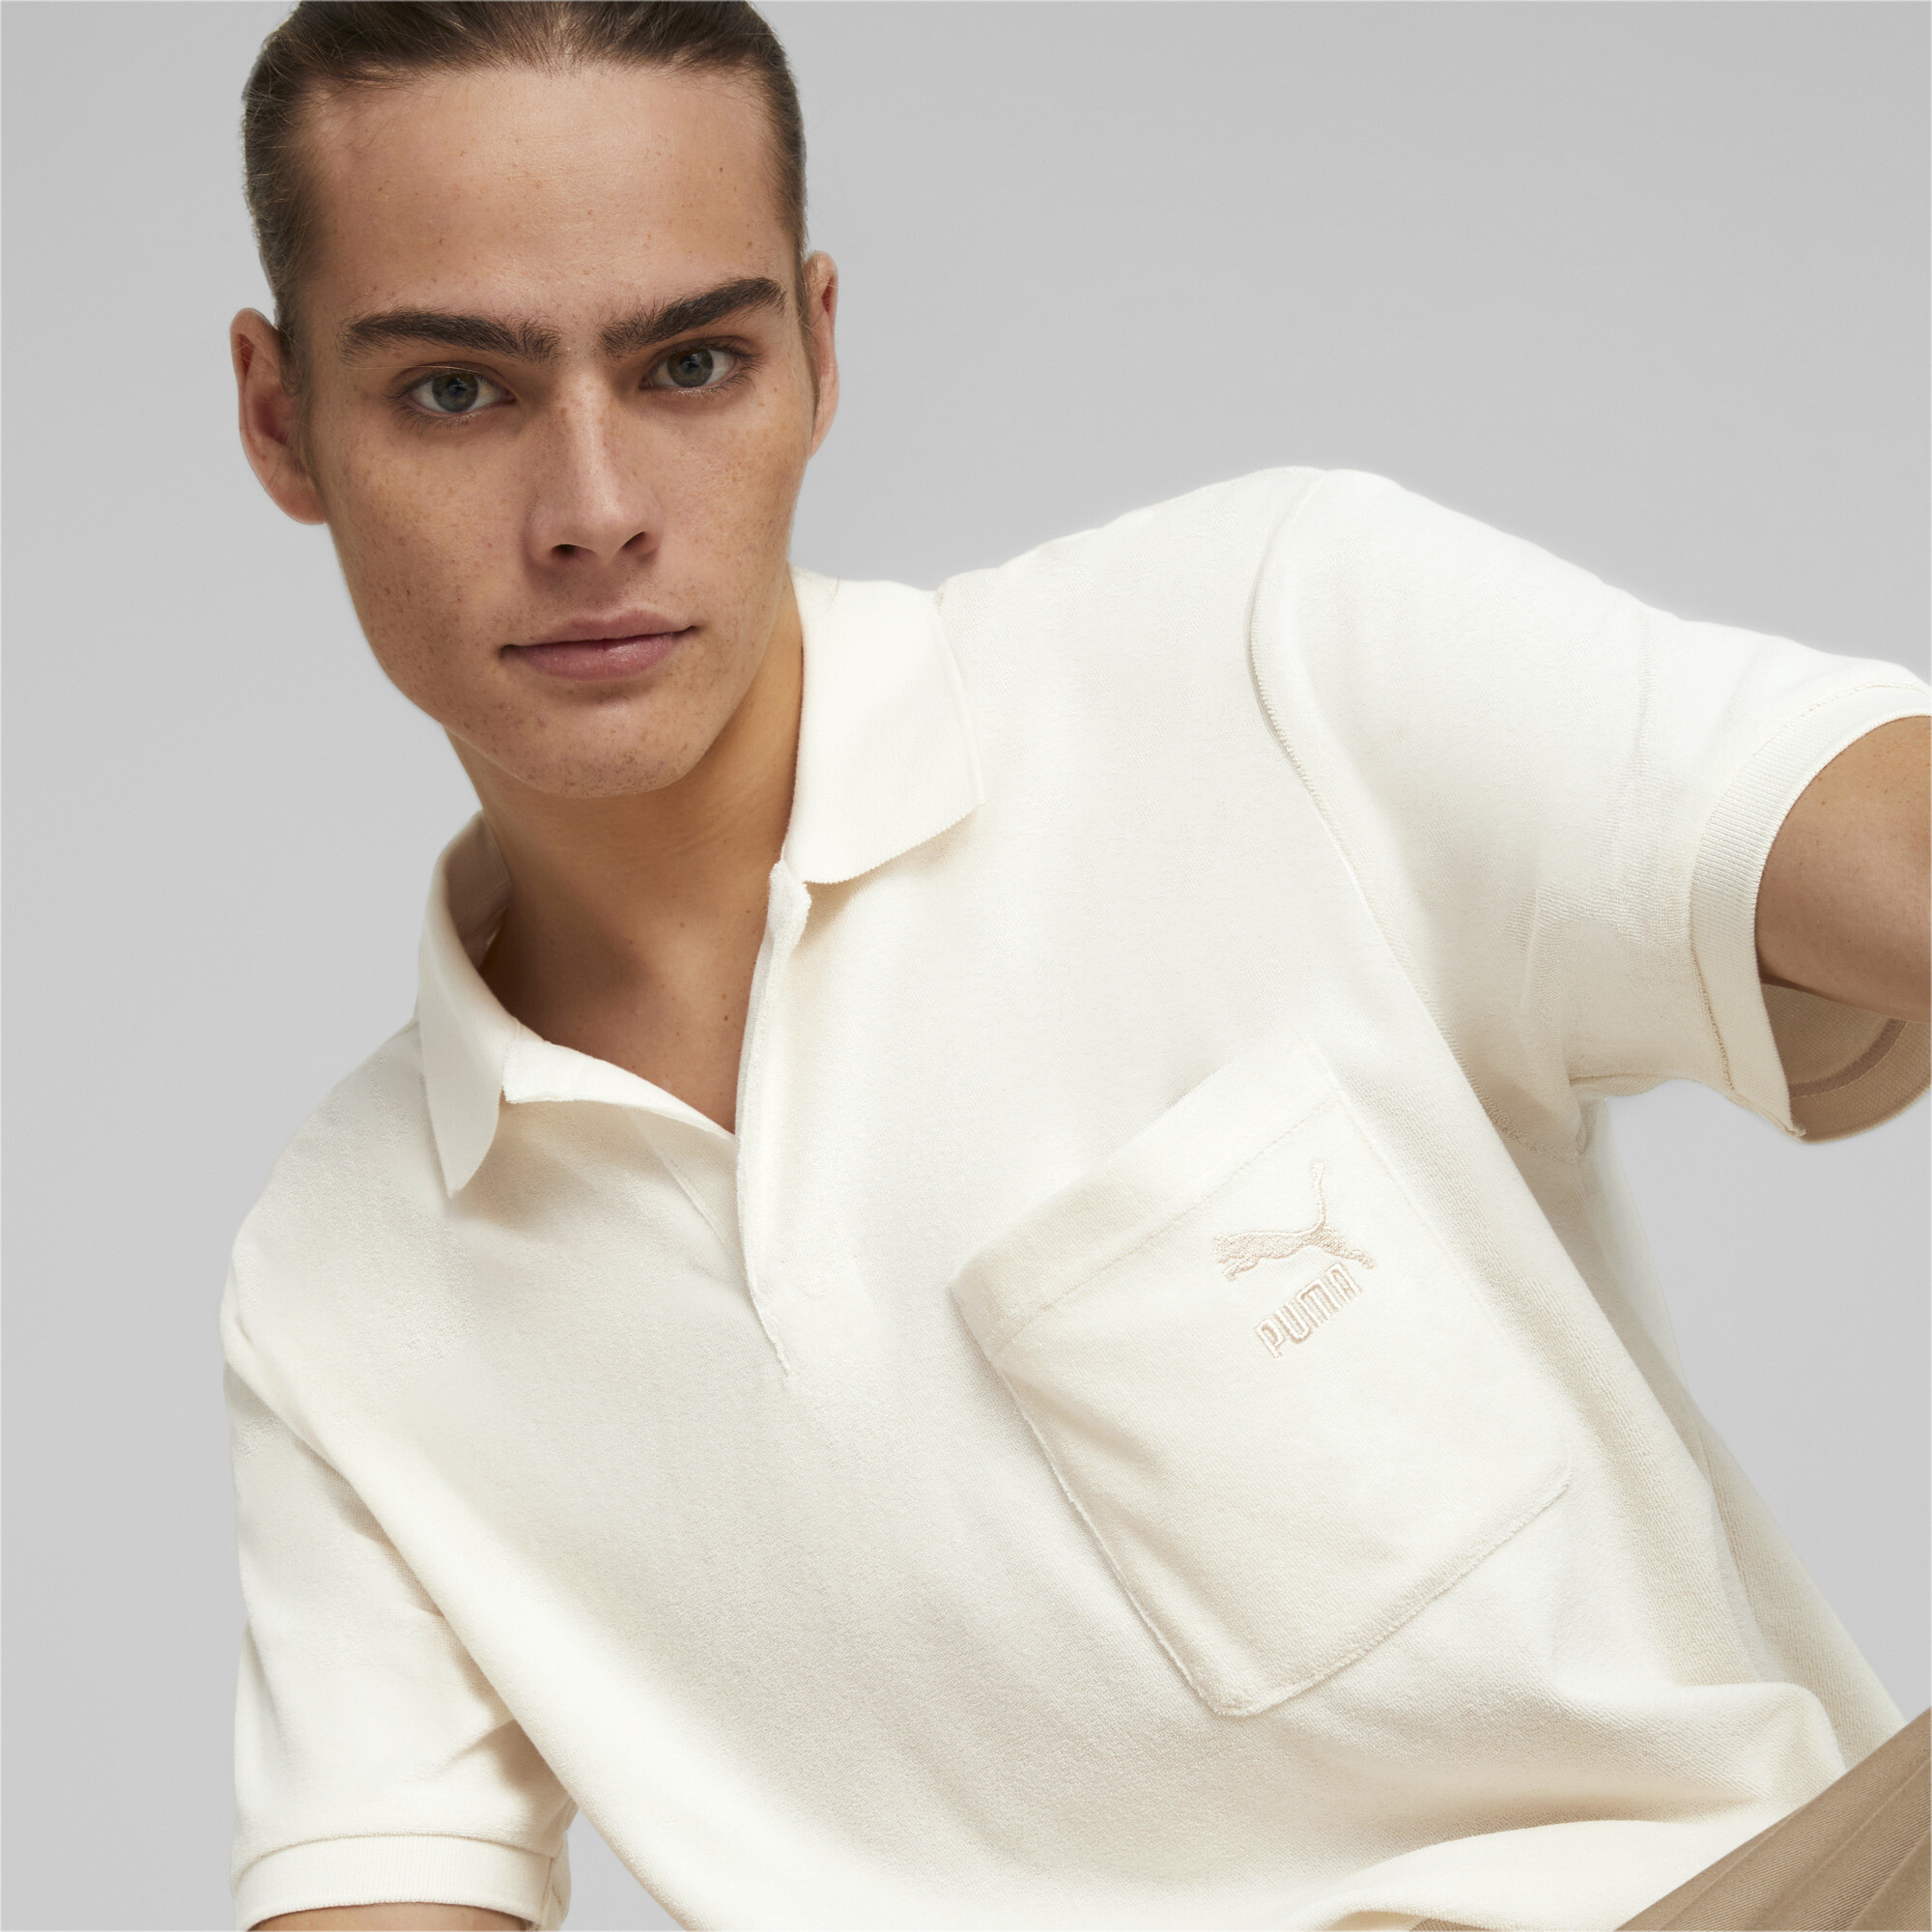 Men's Puma Classics Towelling Polo Shirt T-Shirt, White T-Shirt, Size M T-Shirt, Clothing